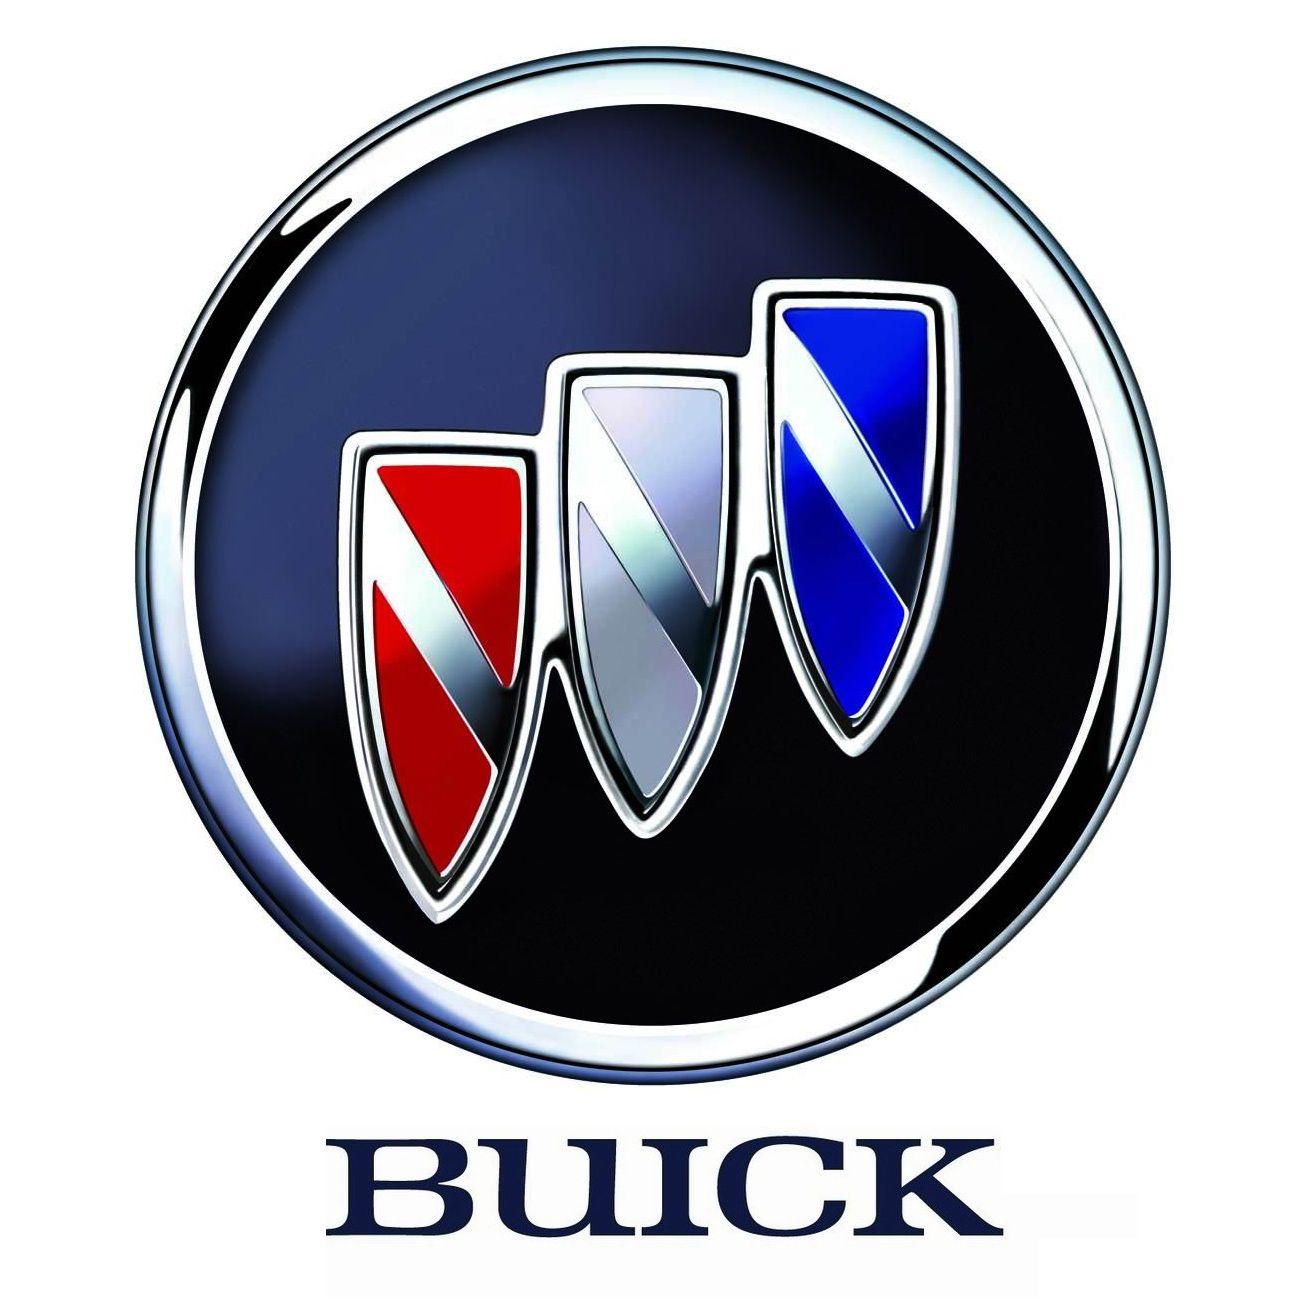 2014 Buick Logo - 2014 Buick Regal | Abernathy Motors